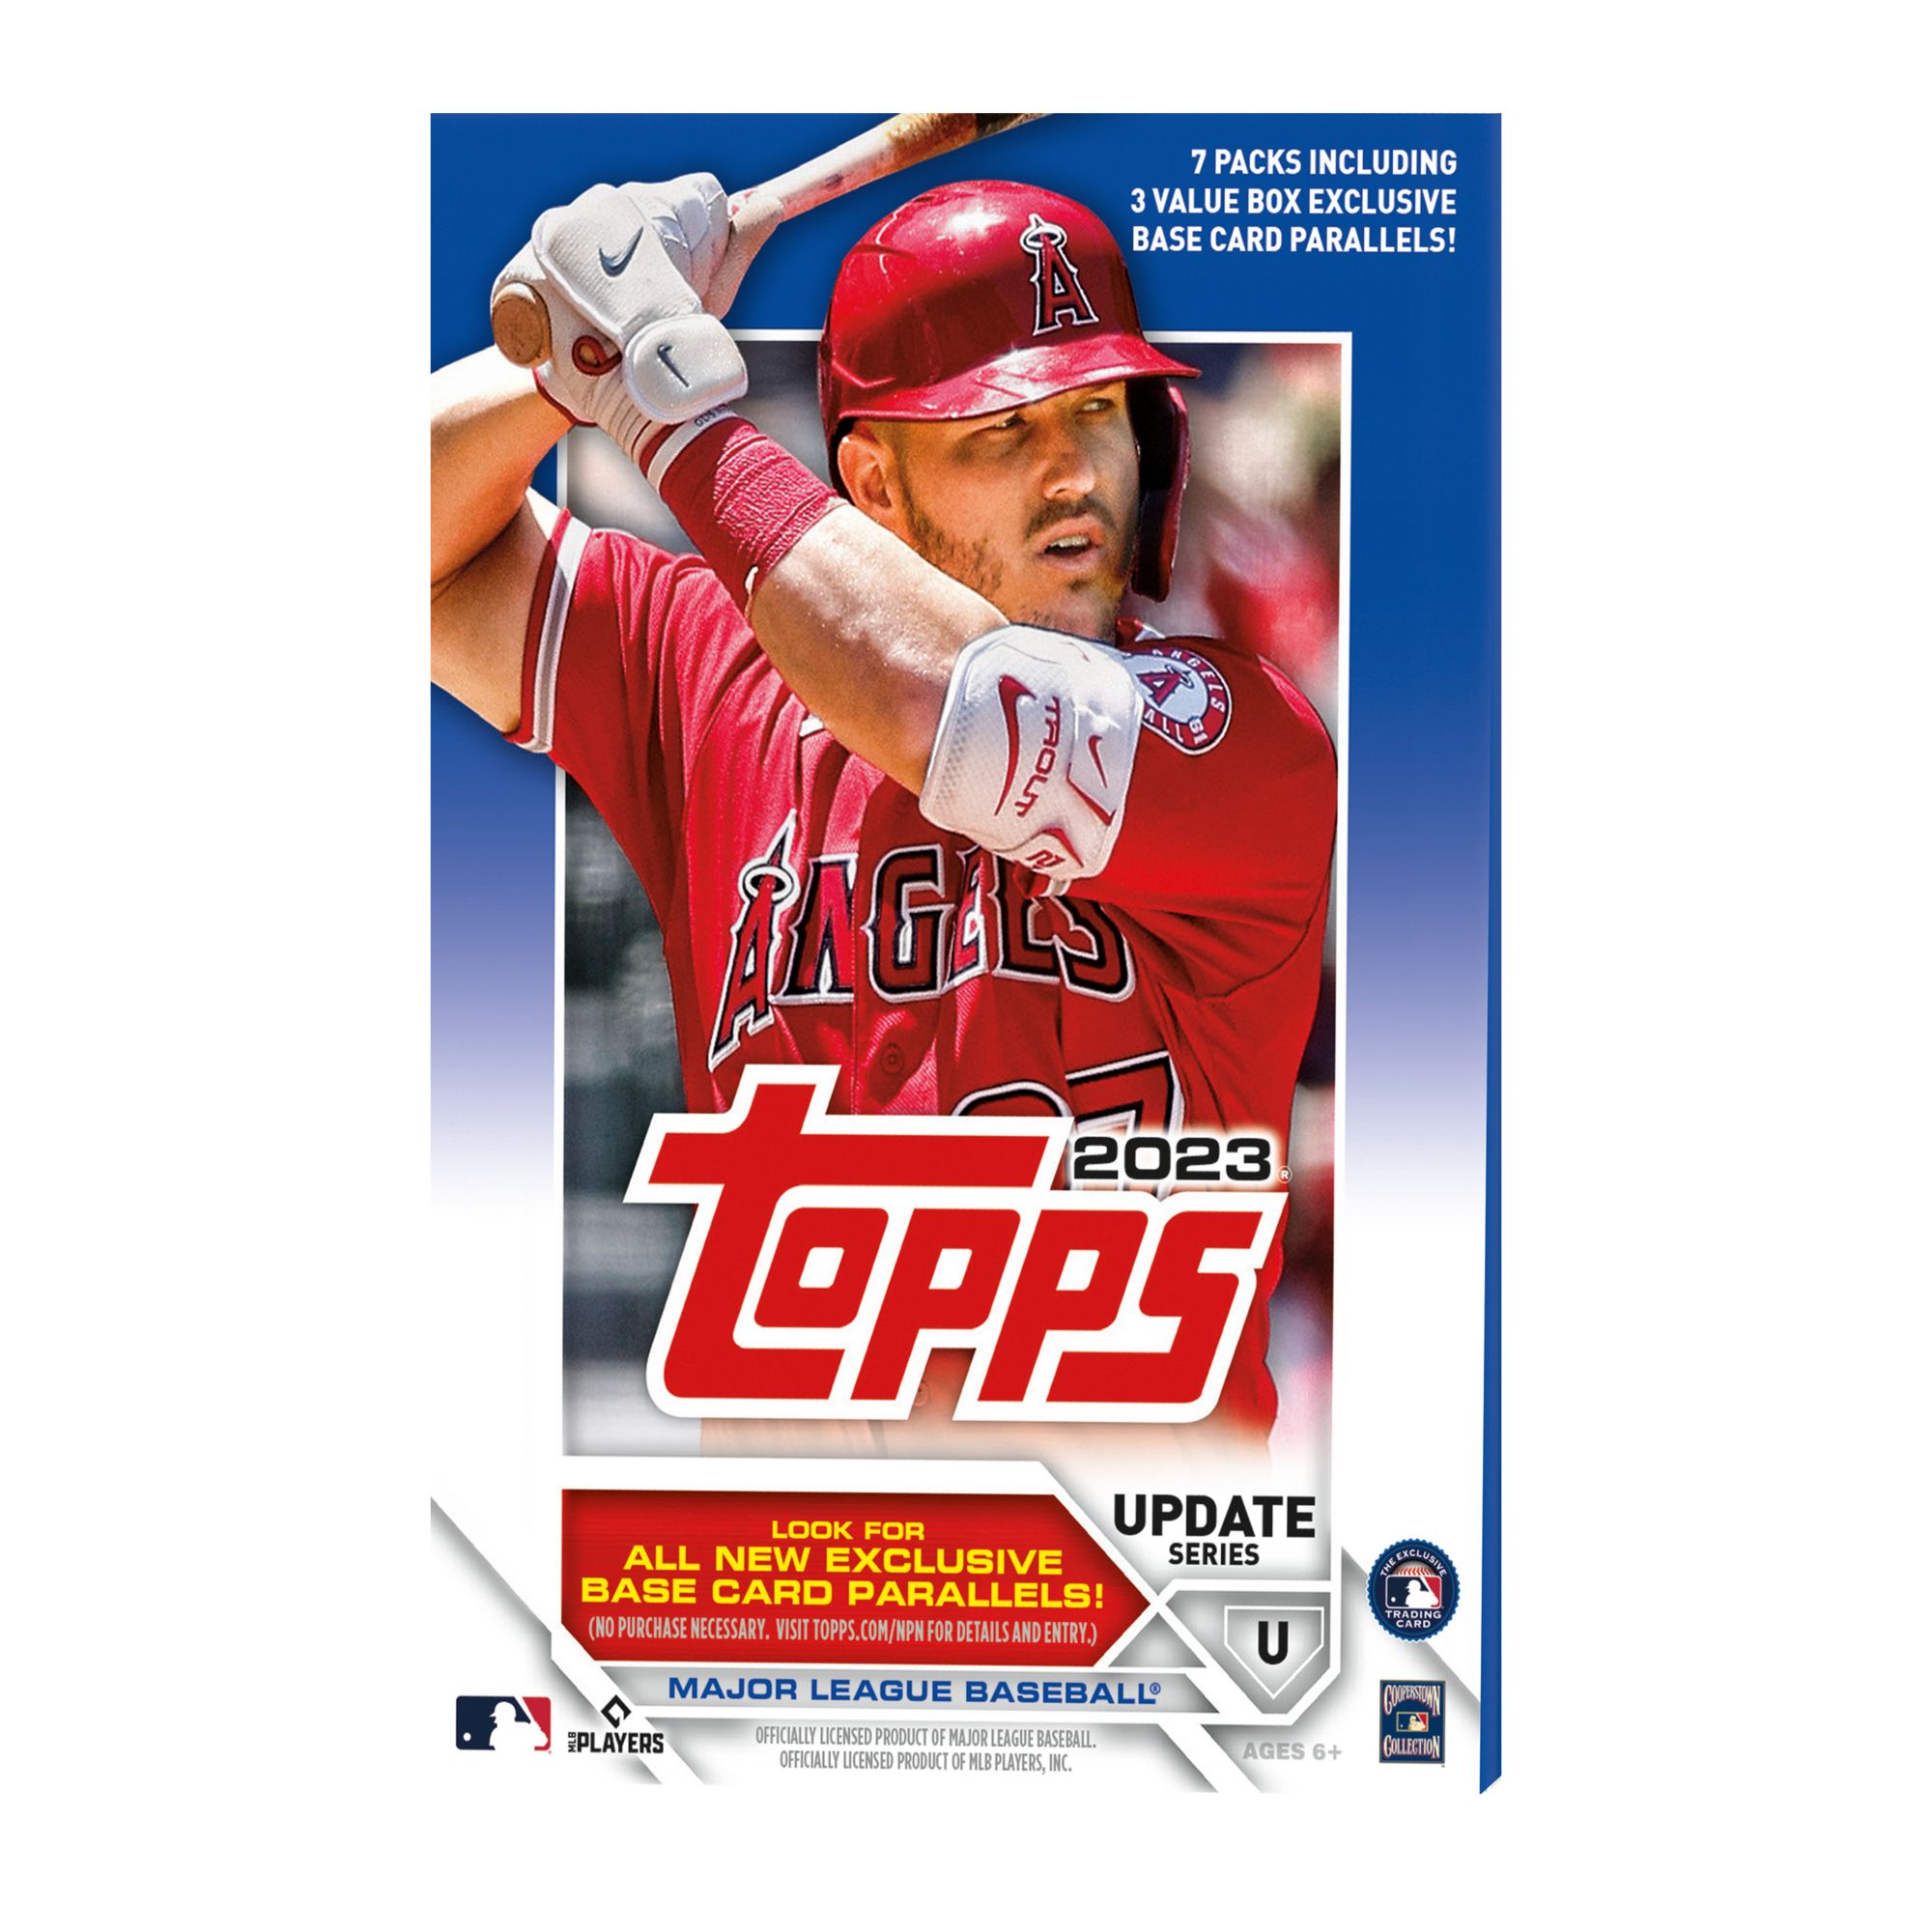 2023 Topps MLB Big League Baseball Trading Cards Blaster Box